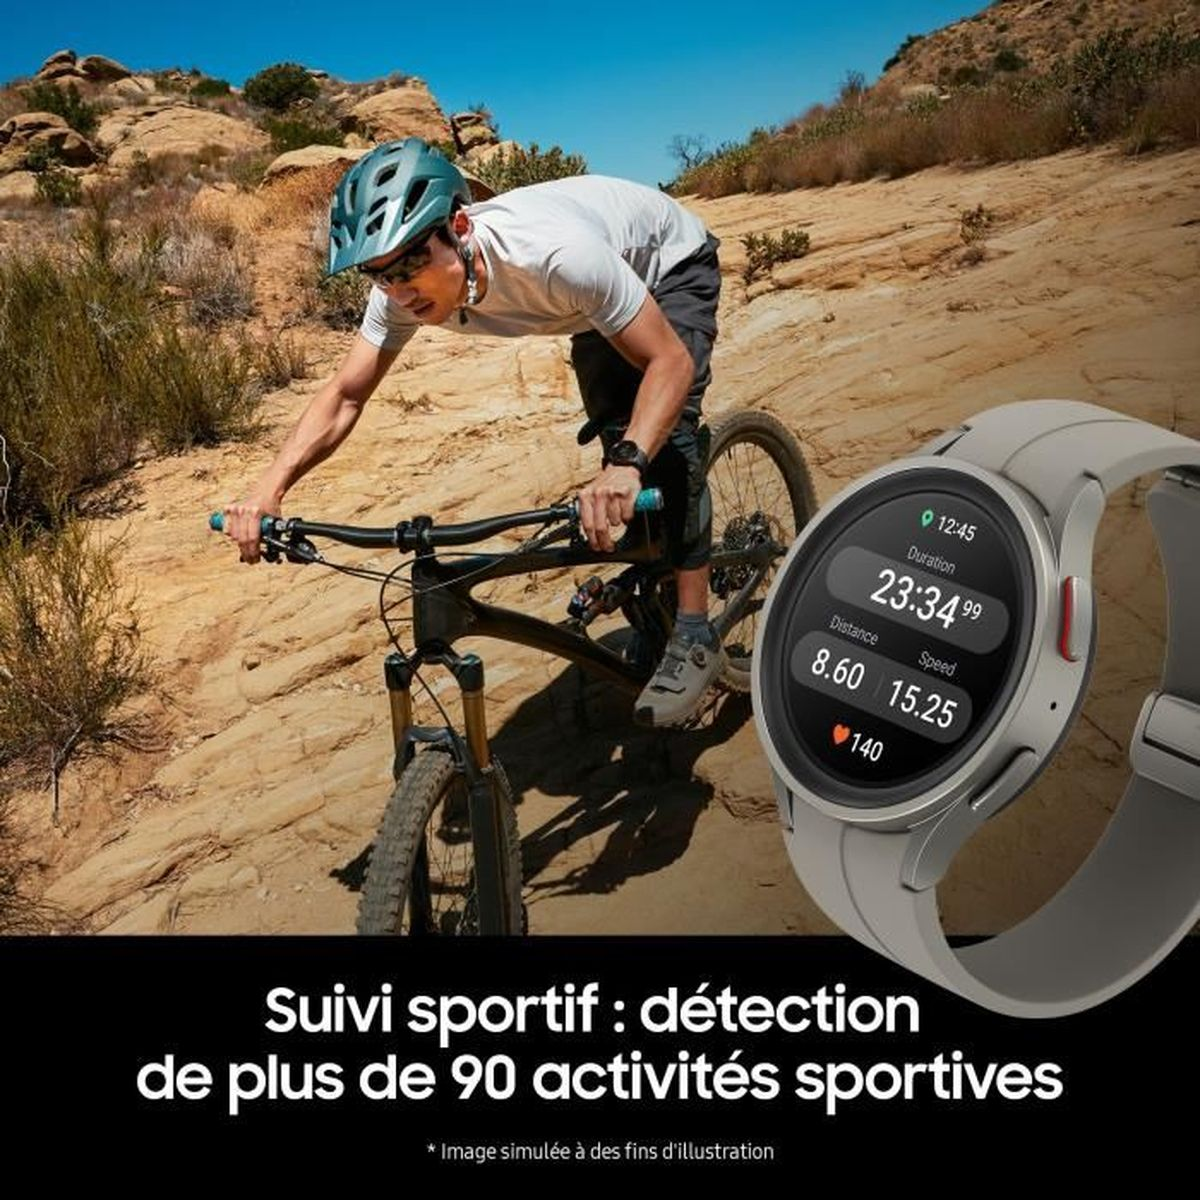 Watch5 Pro silicone, Silver/Black Smartwatch SAMSUNG